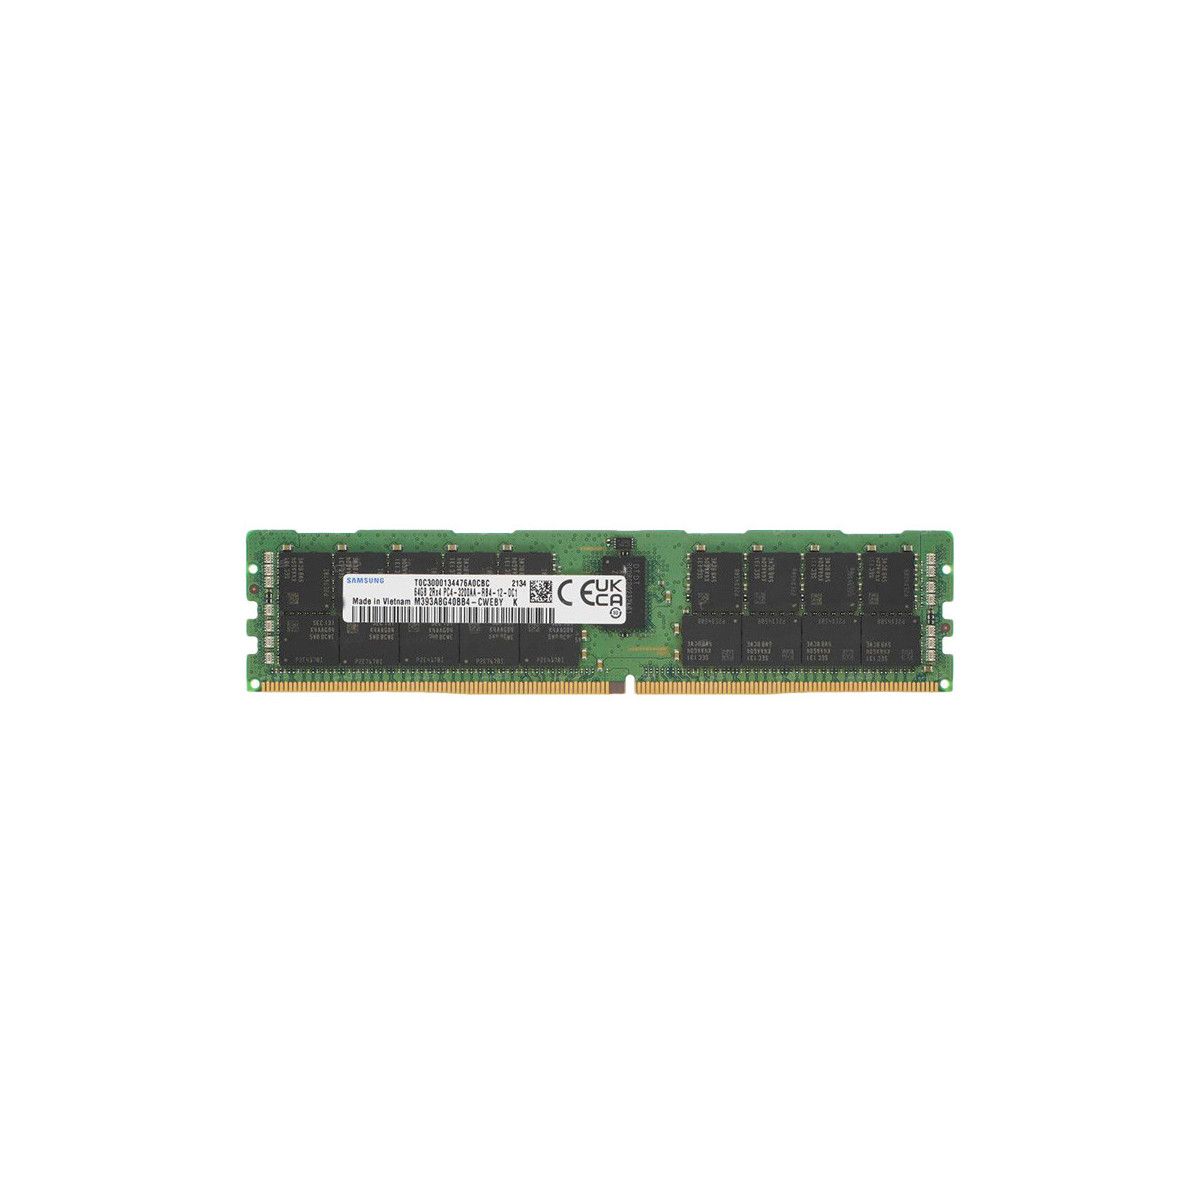 AA810828-MS - Memstar 1x 64GB DDR4-3200 RDIMM PC4-25600R - Mem-Star OEM compatibile Memoria 1 - Memstar 